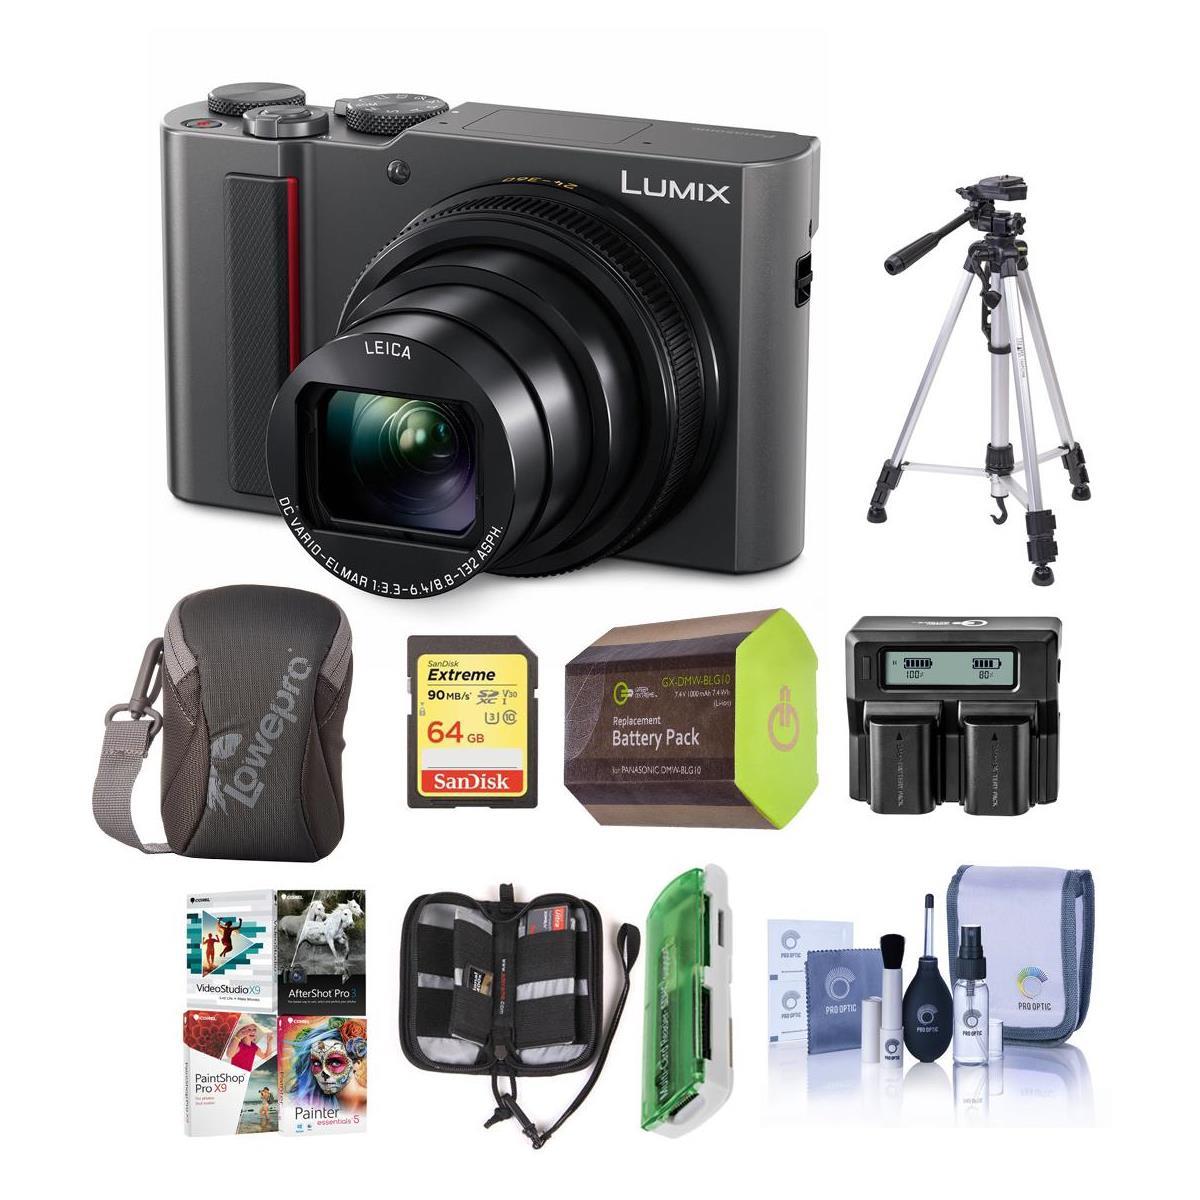 Panasonic Lumix DMC-ZS200 Digital Camera, Silver With Premium Accessory Bundle